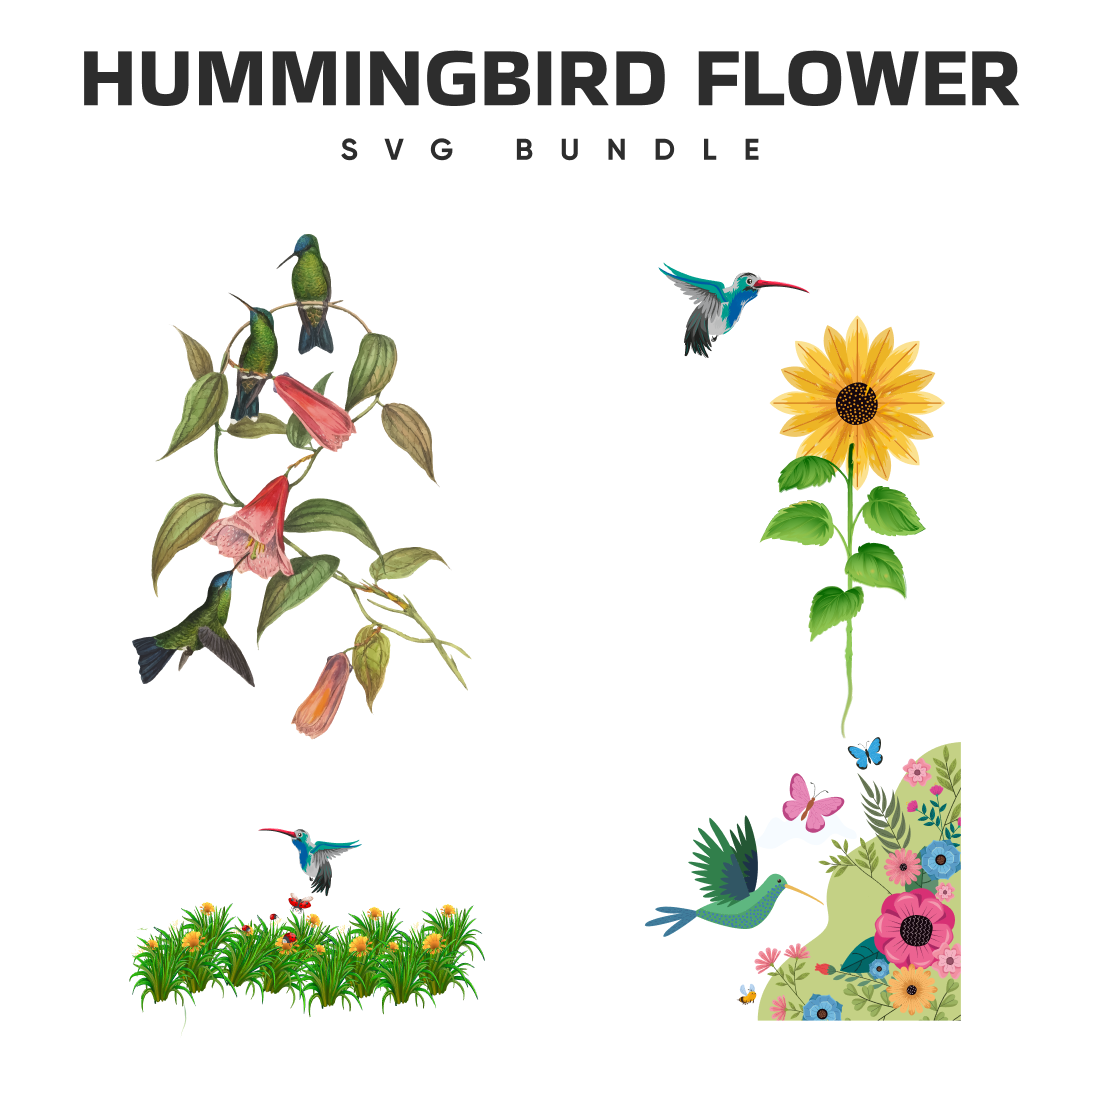 The hummingbird flower svg bundle.